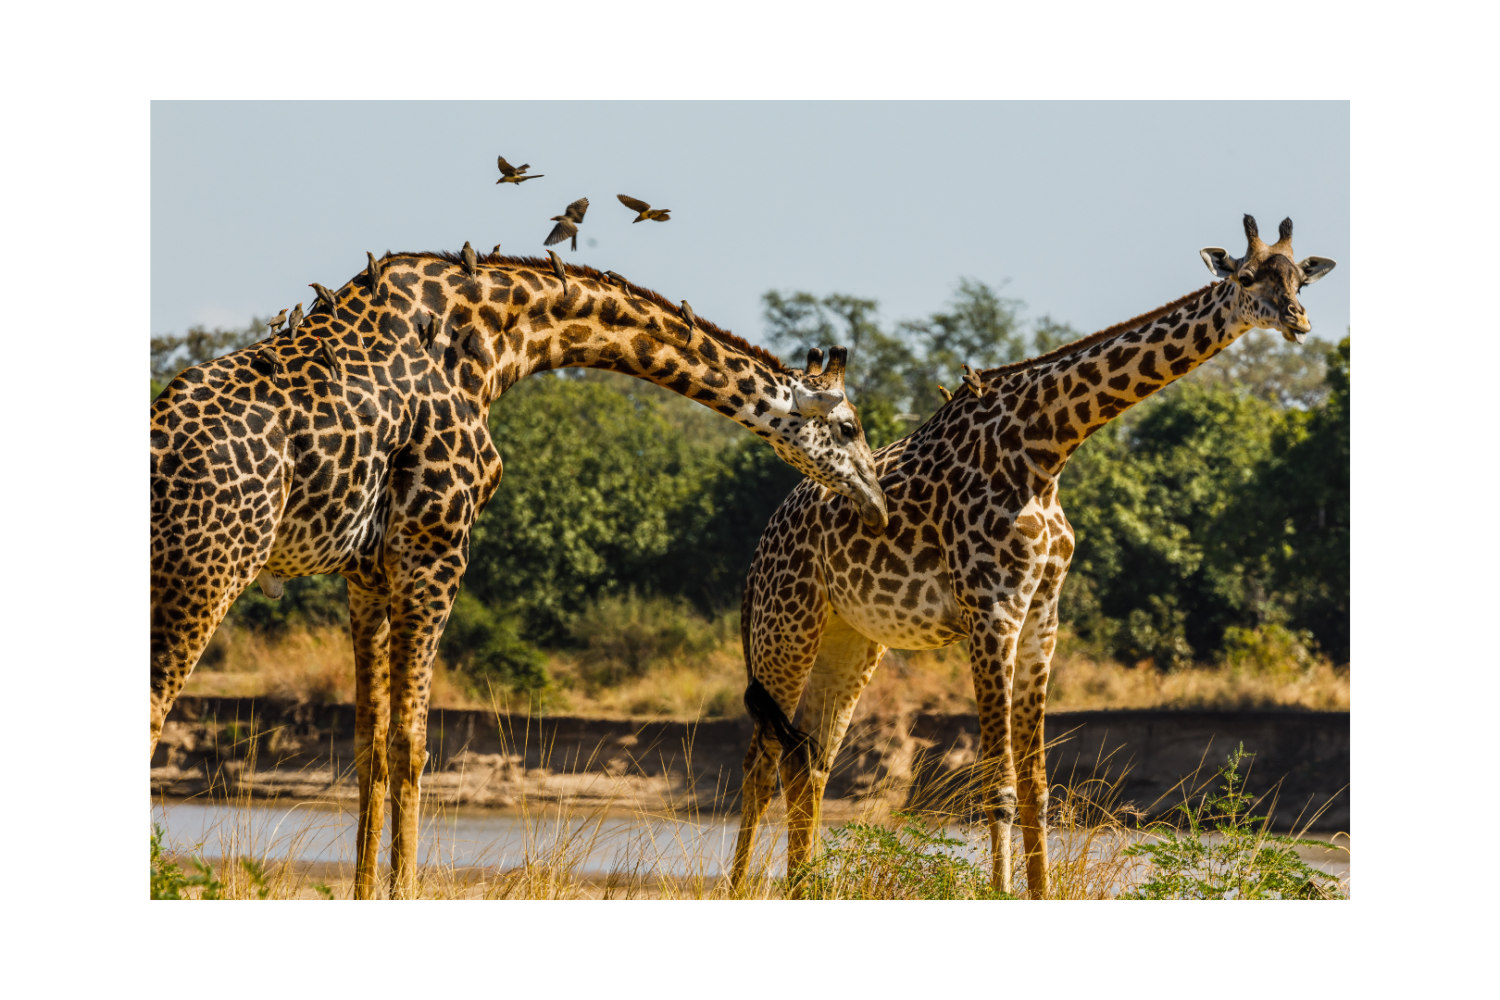 Giraffe in serengeti national park safari